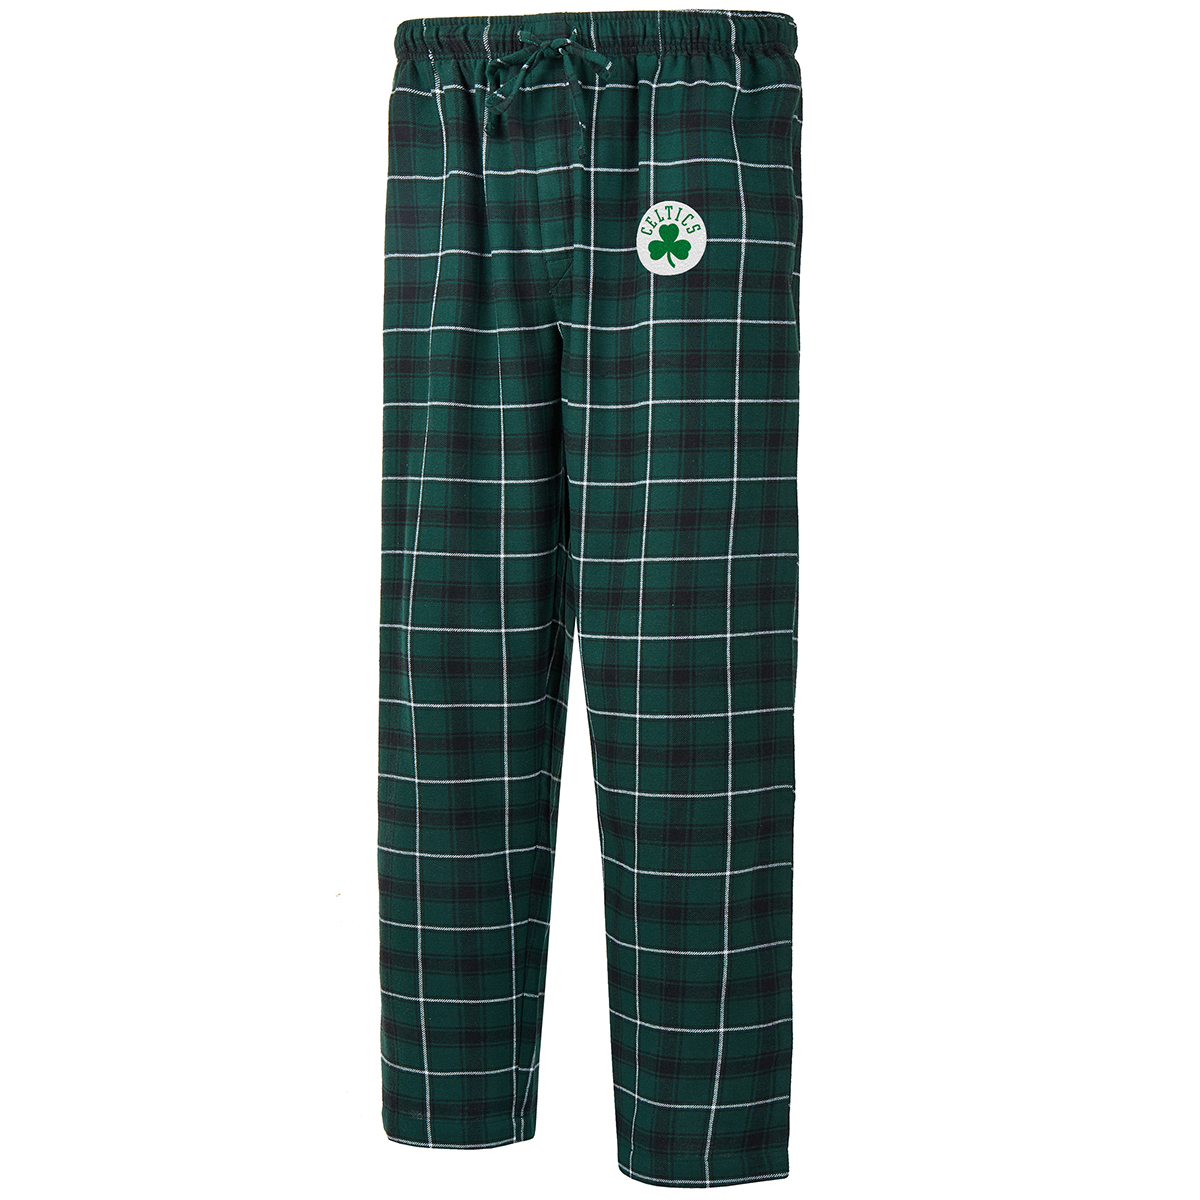 Boston Celtics Men's Ledger Sleep Pants